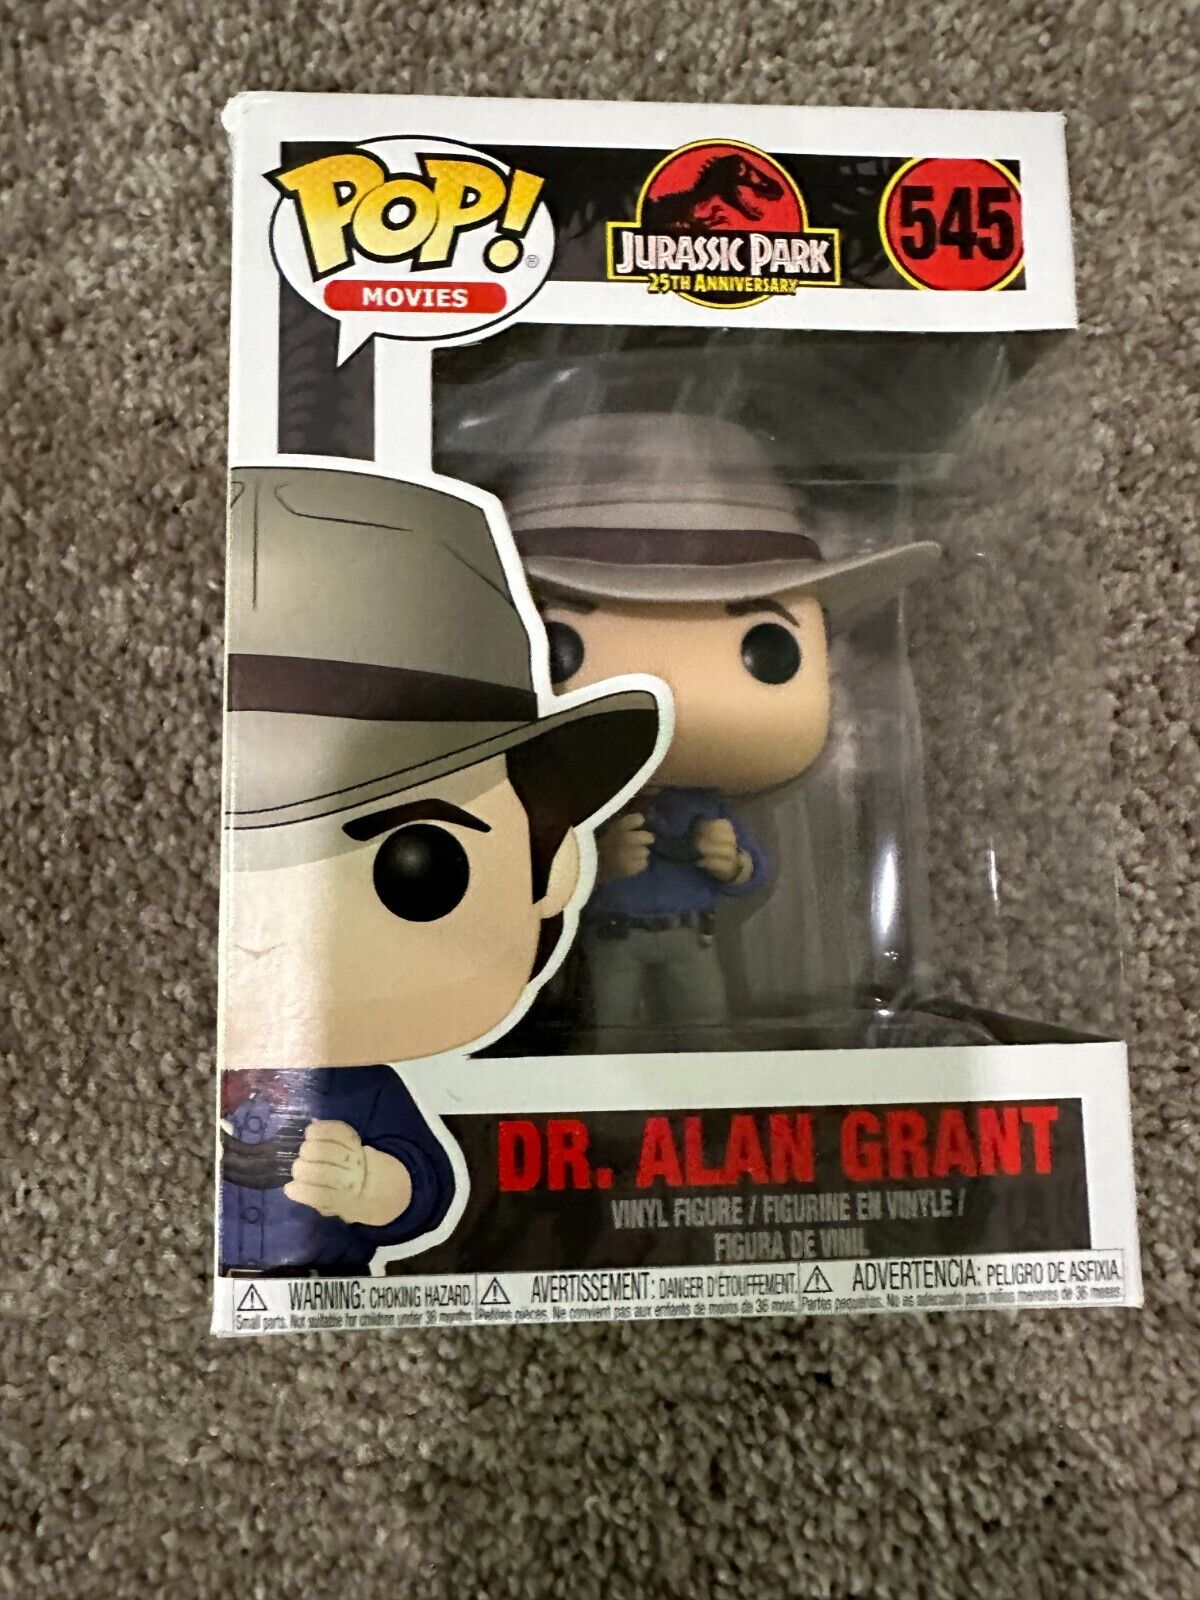 POP Doll Jurassic Park	Dr. Alan Grant	545